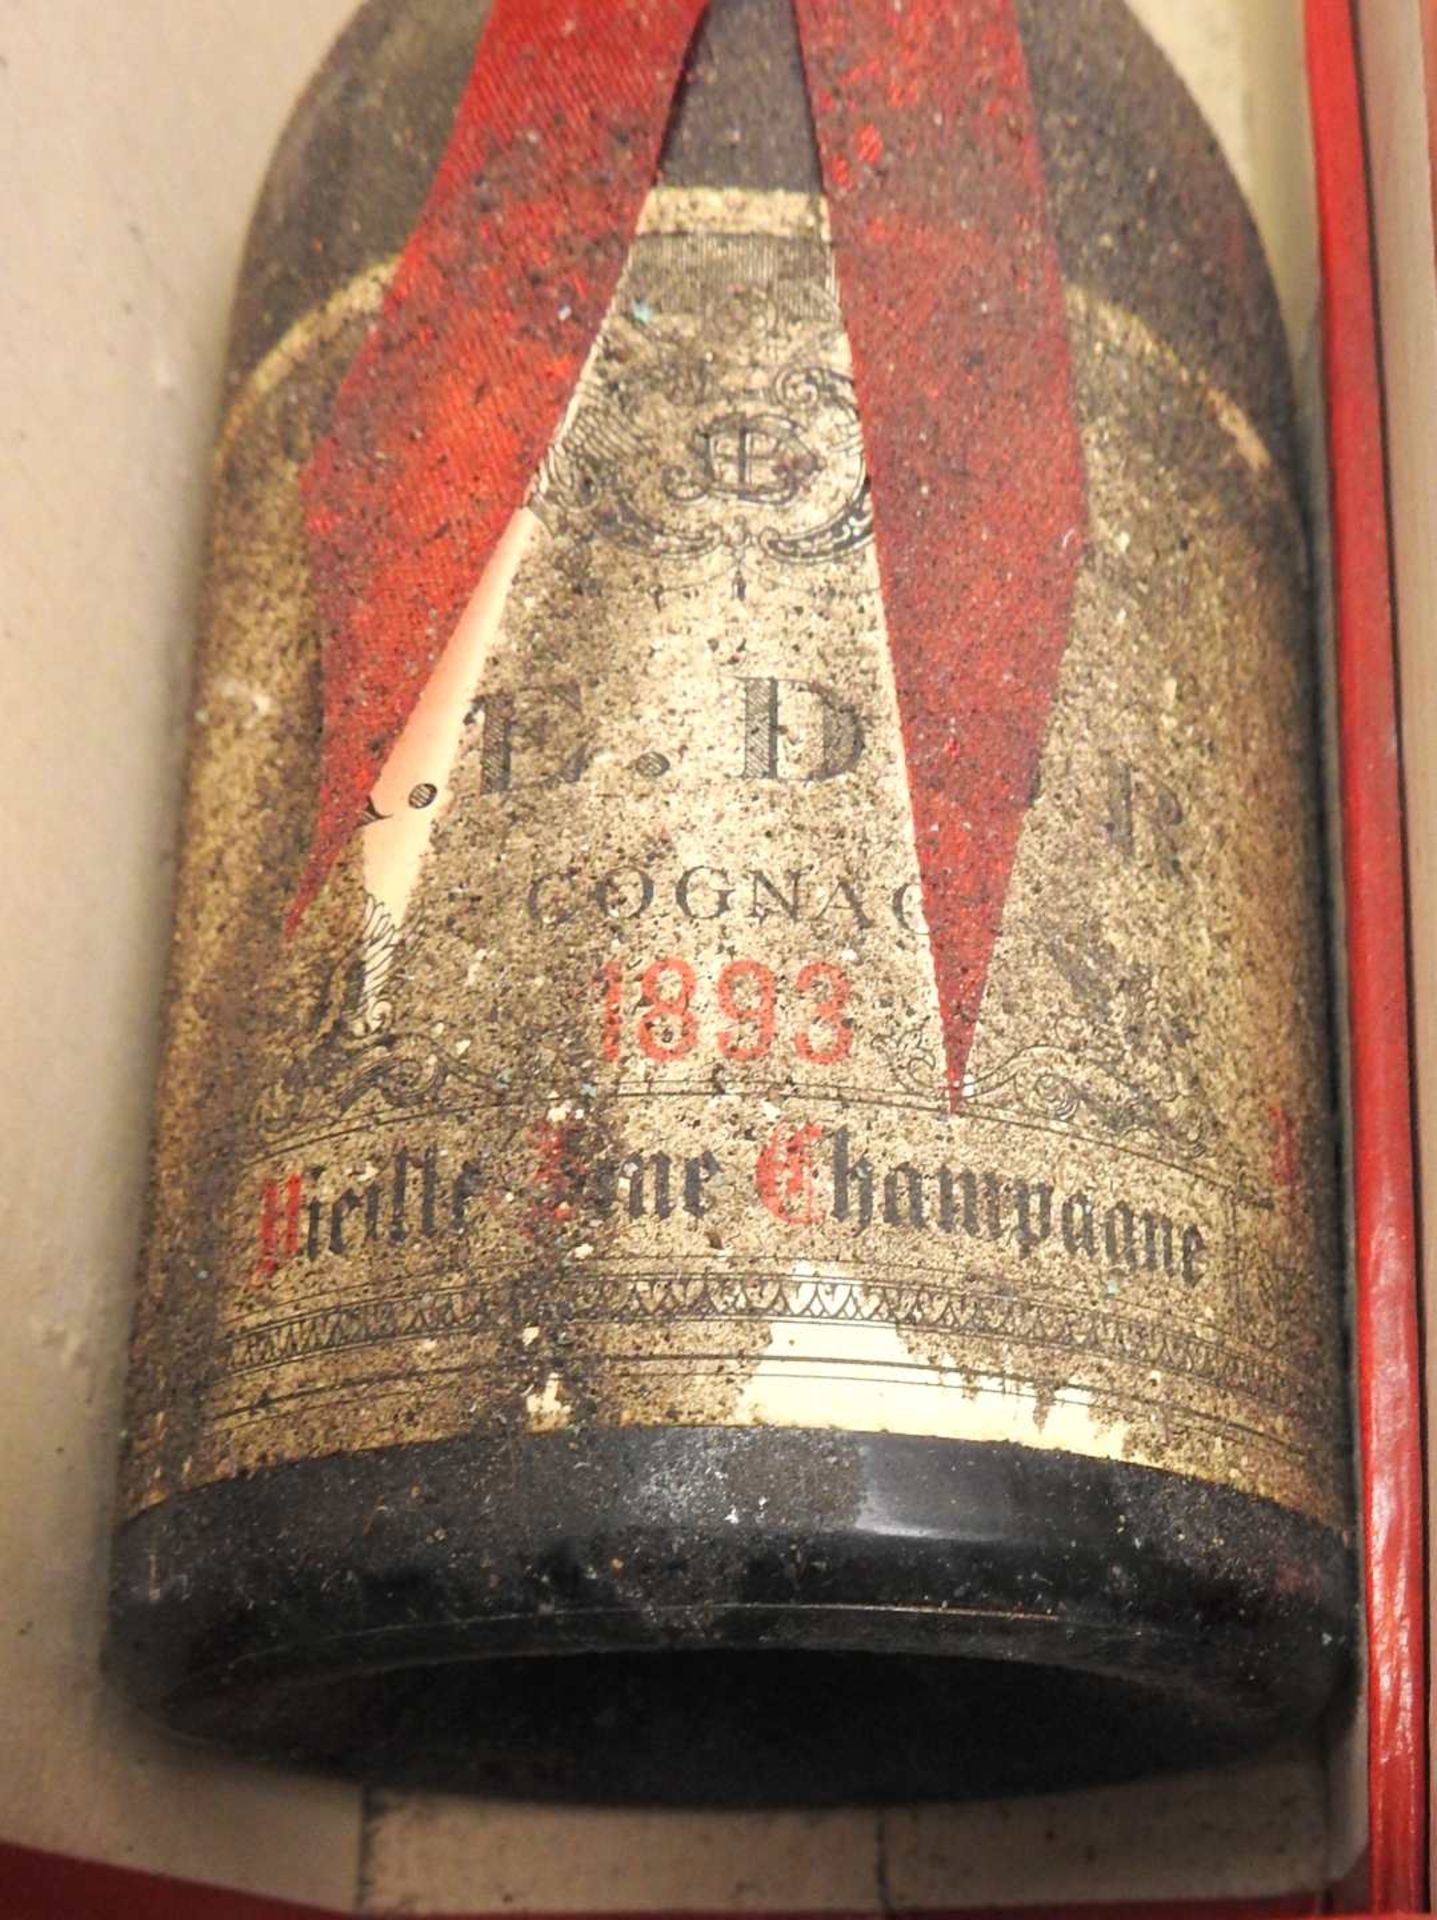 A.E. Dor, CognacVieille Fine Champagne. Inhalt wohl 700 ml, Jahrgang 1893: Destillerie - Image 4 of 5